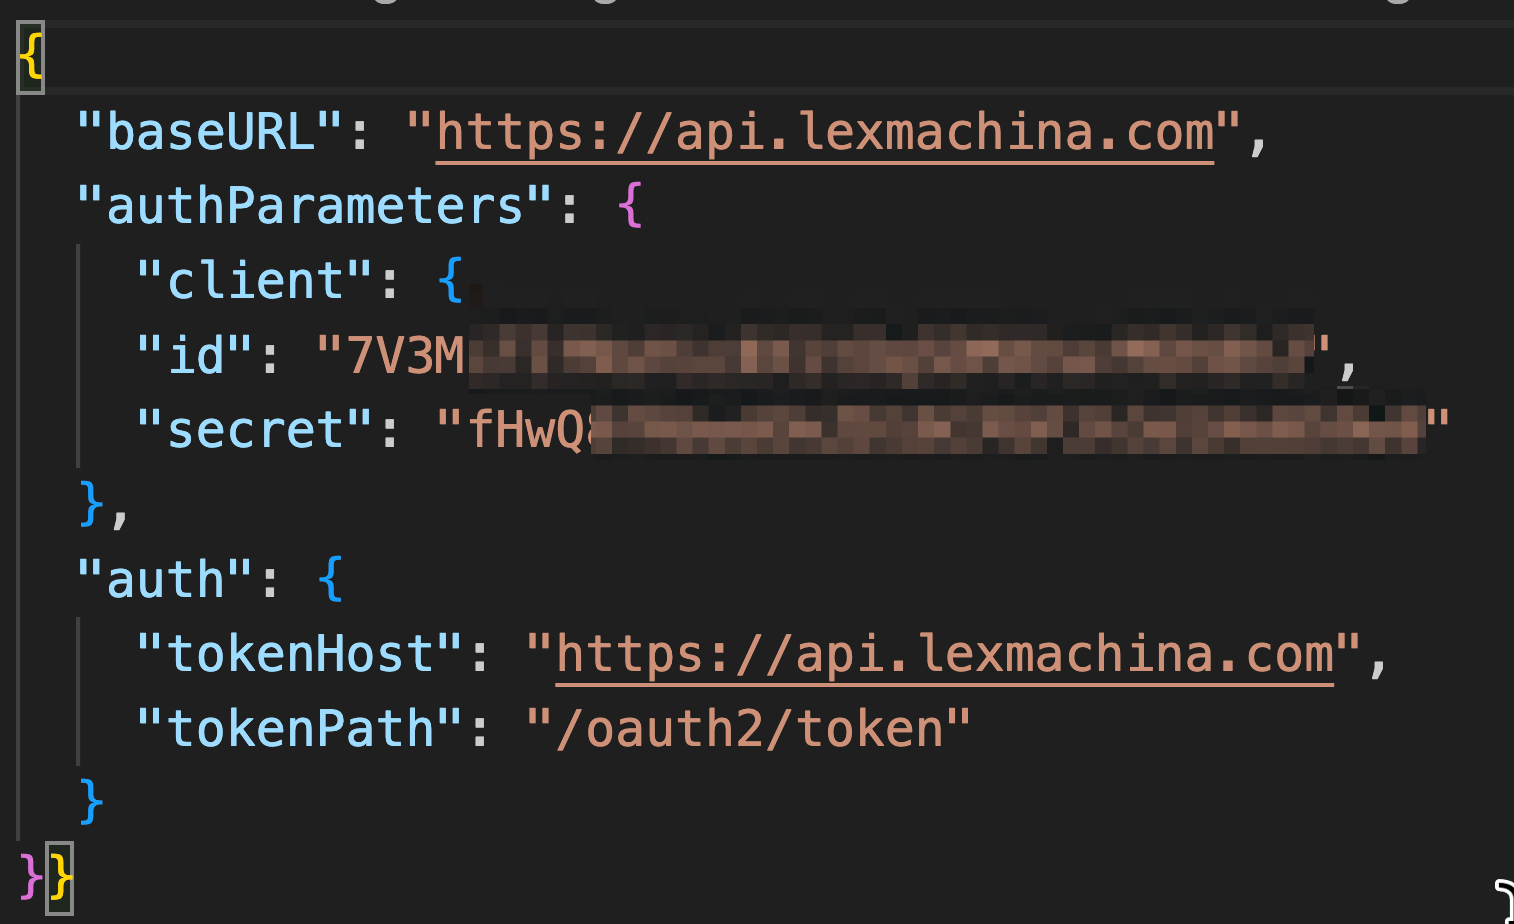 JSON file showing baseUrl and tokenHost as https://api.lexmachina.com